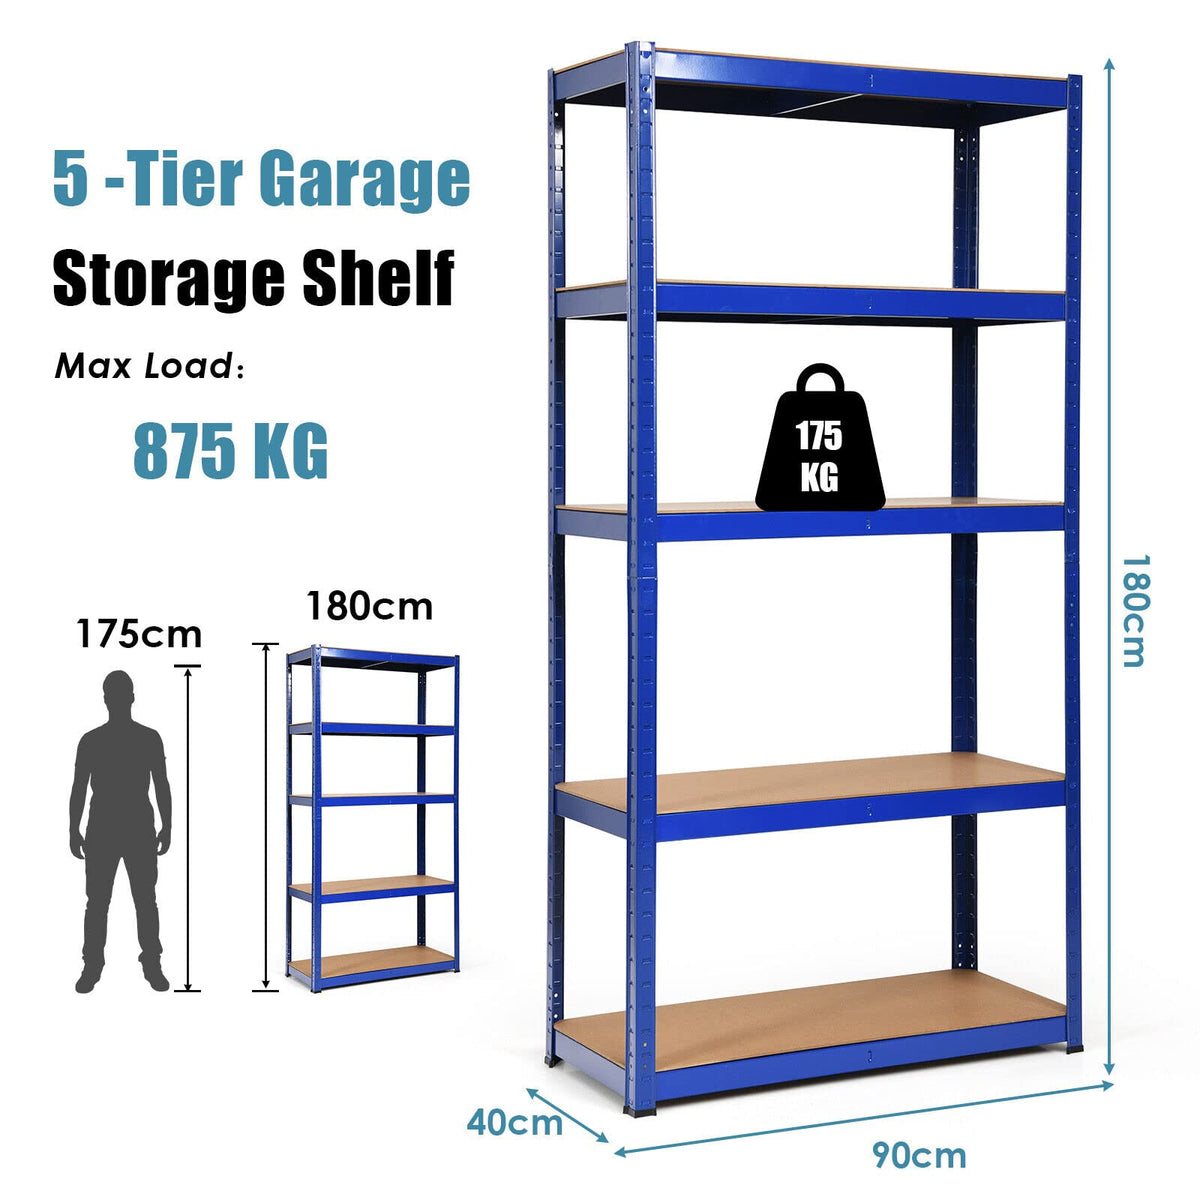 Giantex Storage Rack Shelving Unit, Storage Shelf Steel Garage Utility Rack w/5 Adjustable Shelves